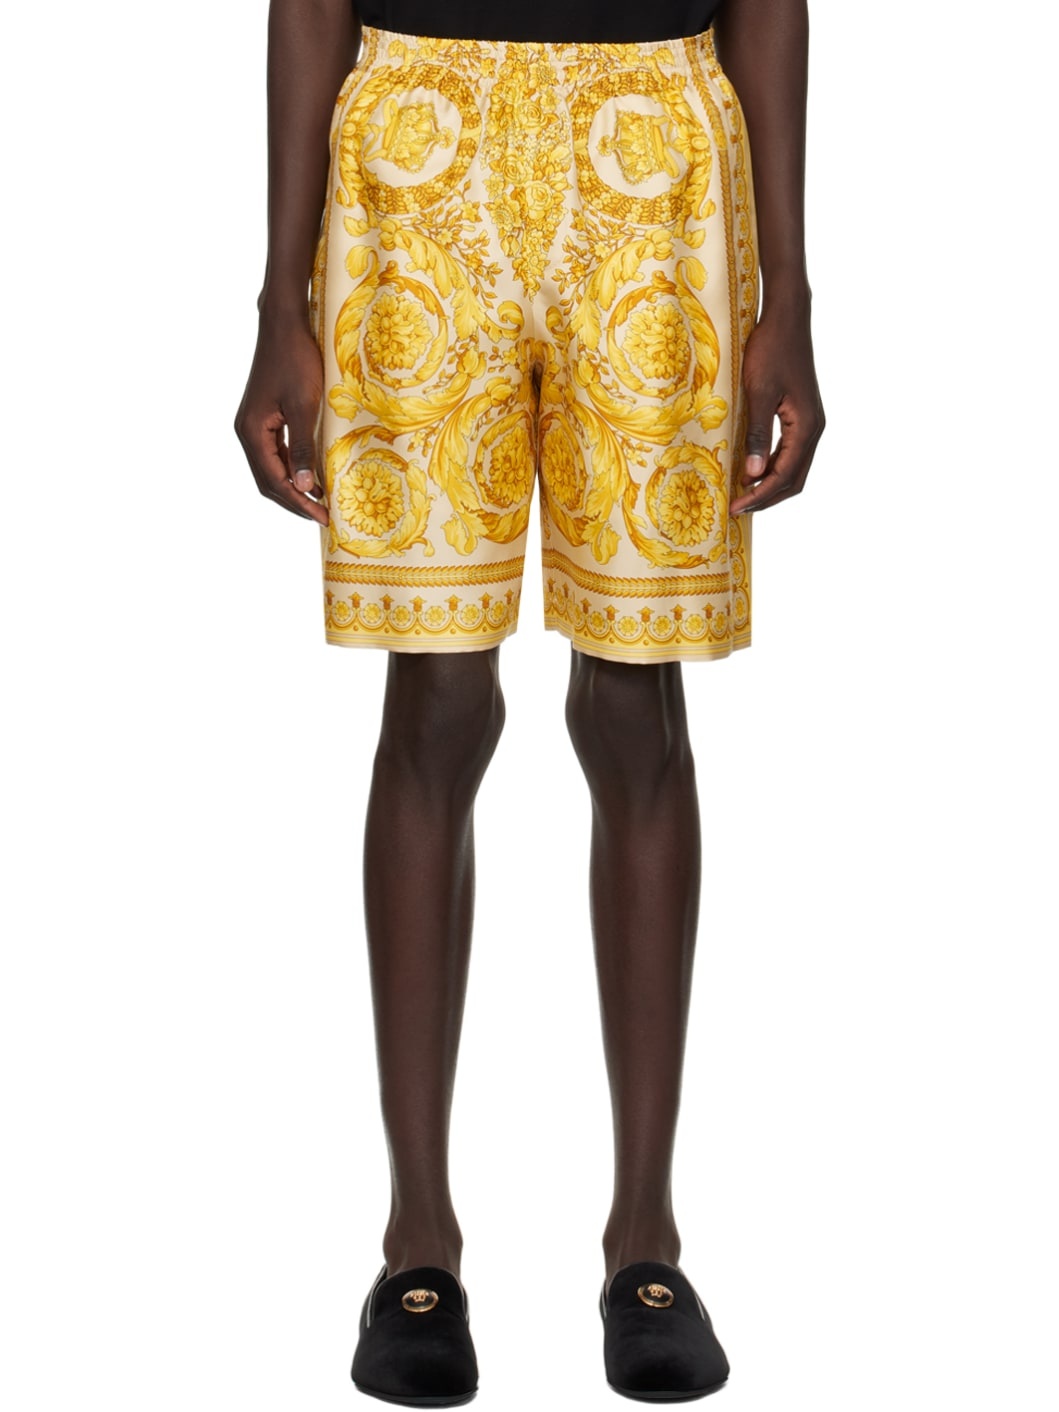 Yellow Barocco Shorts - 1